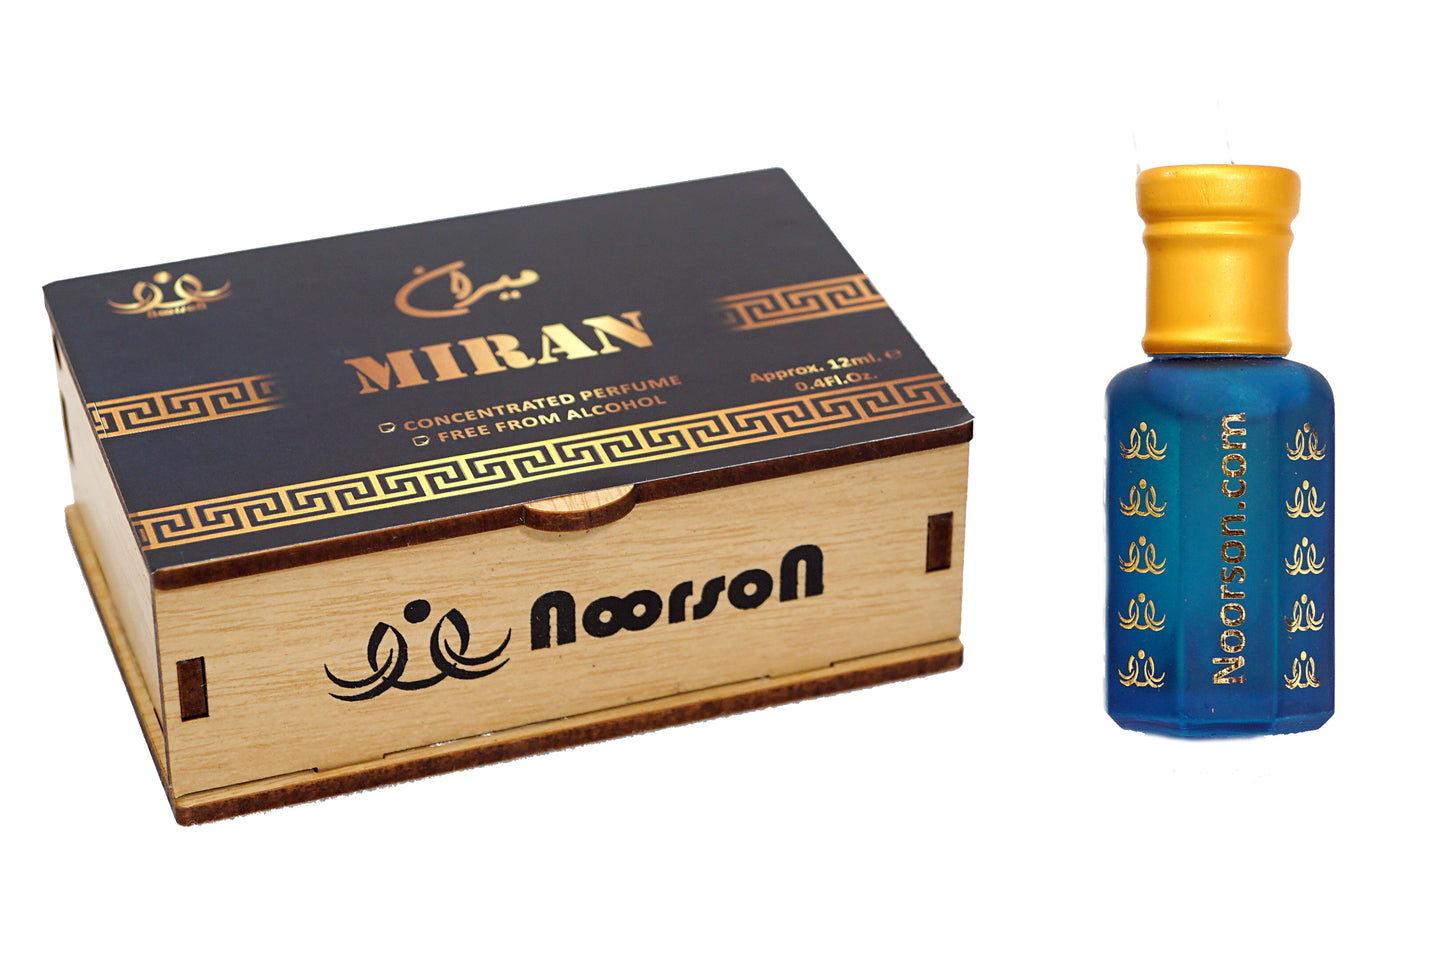 Miran Non-Alcoholic Premium Quality Attar Perfume